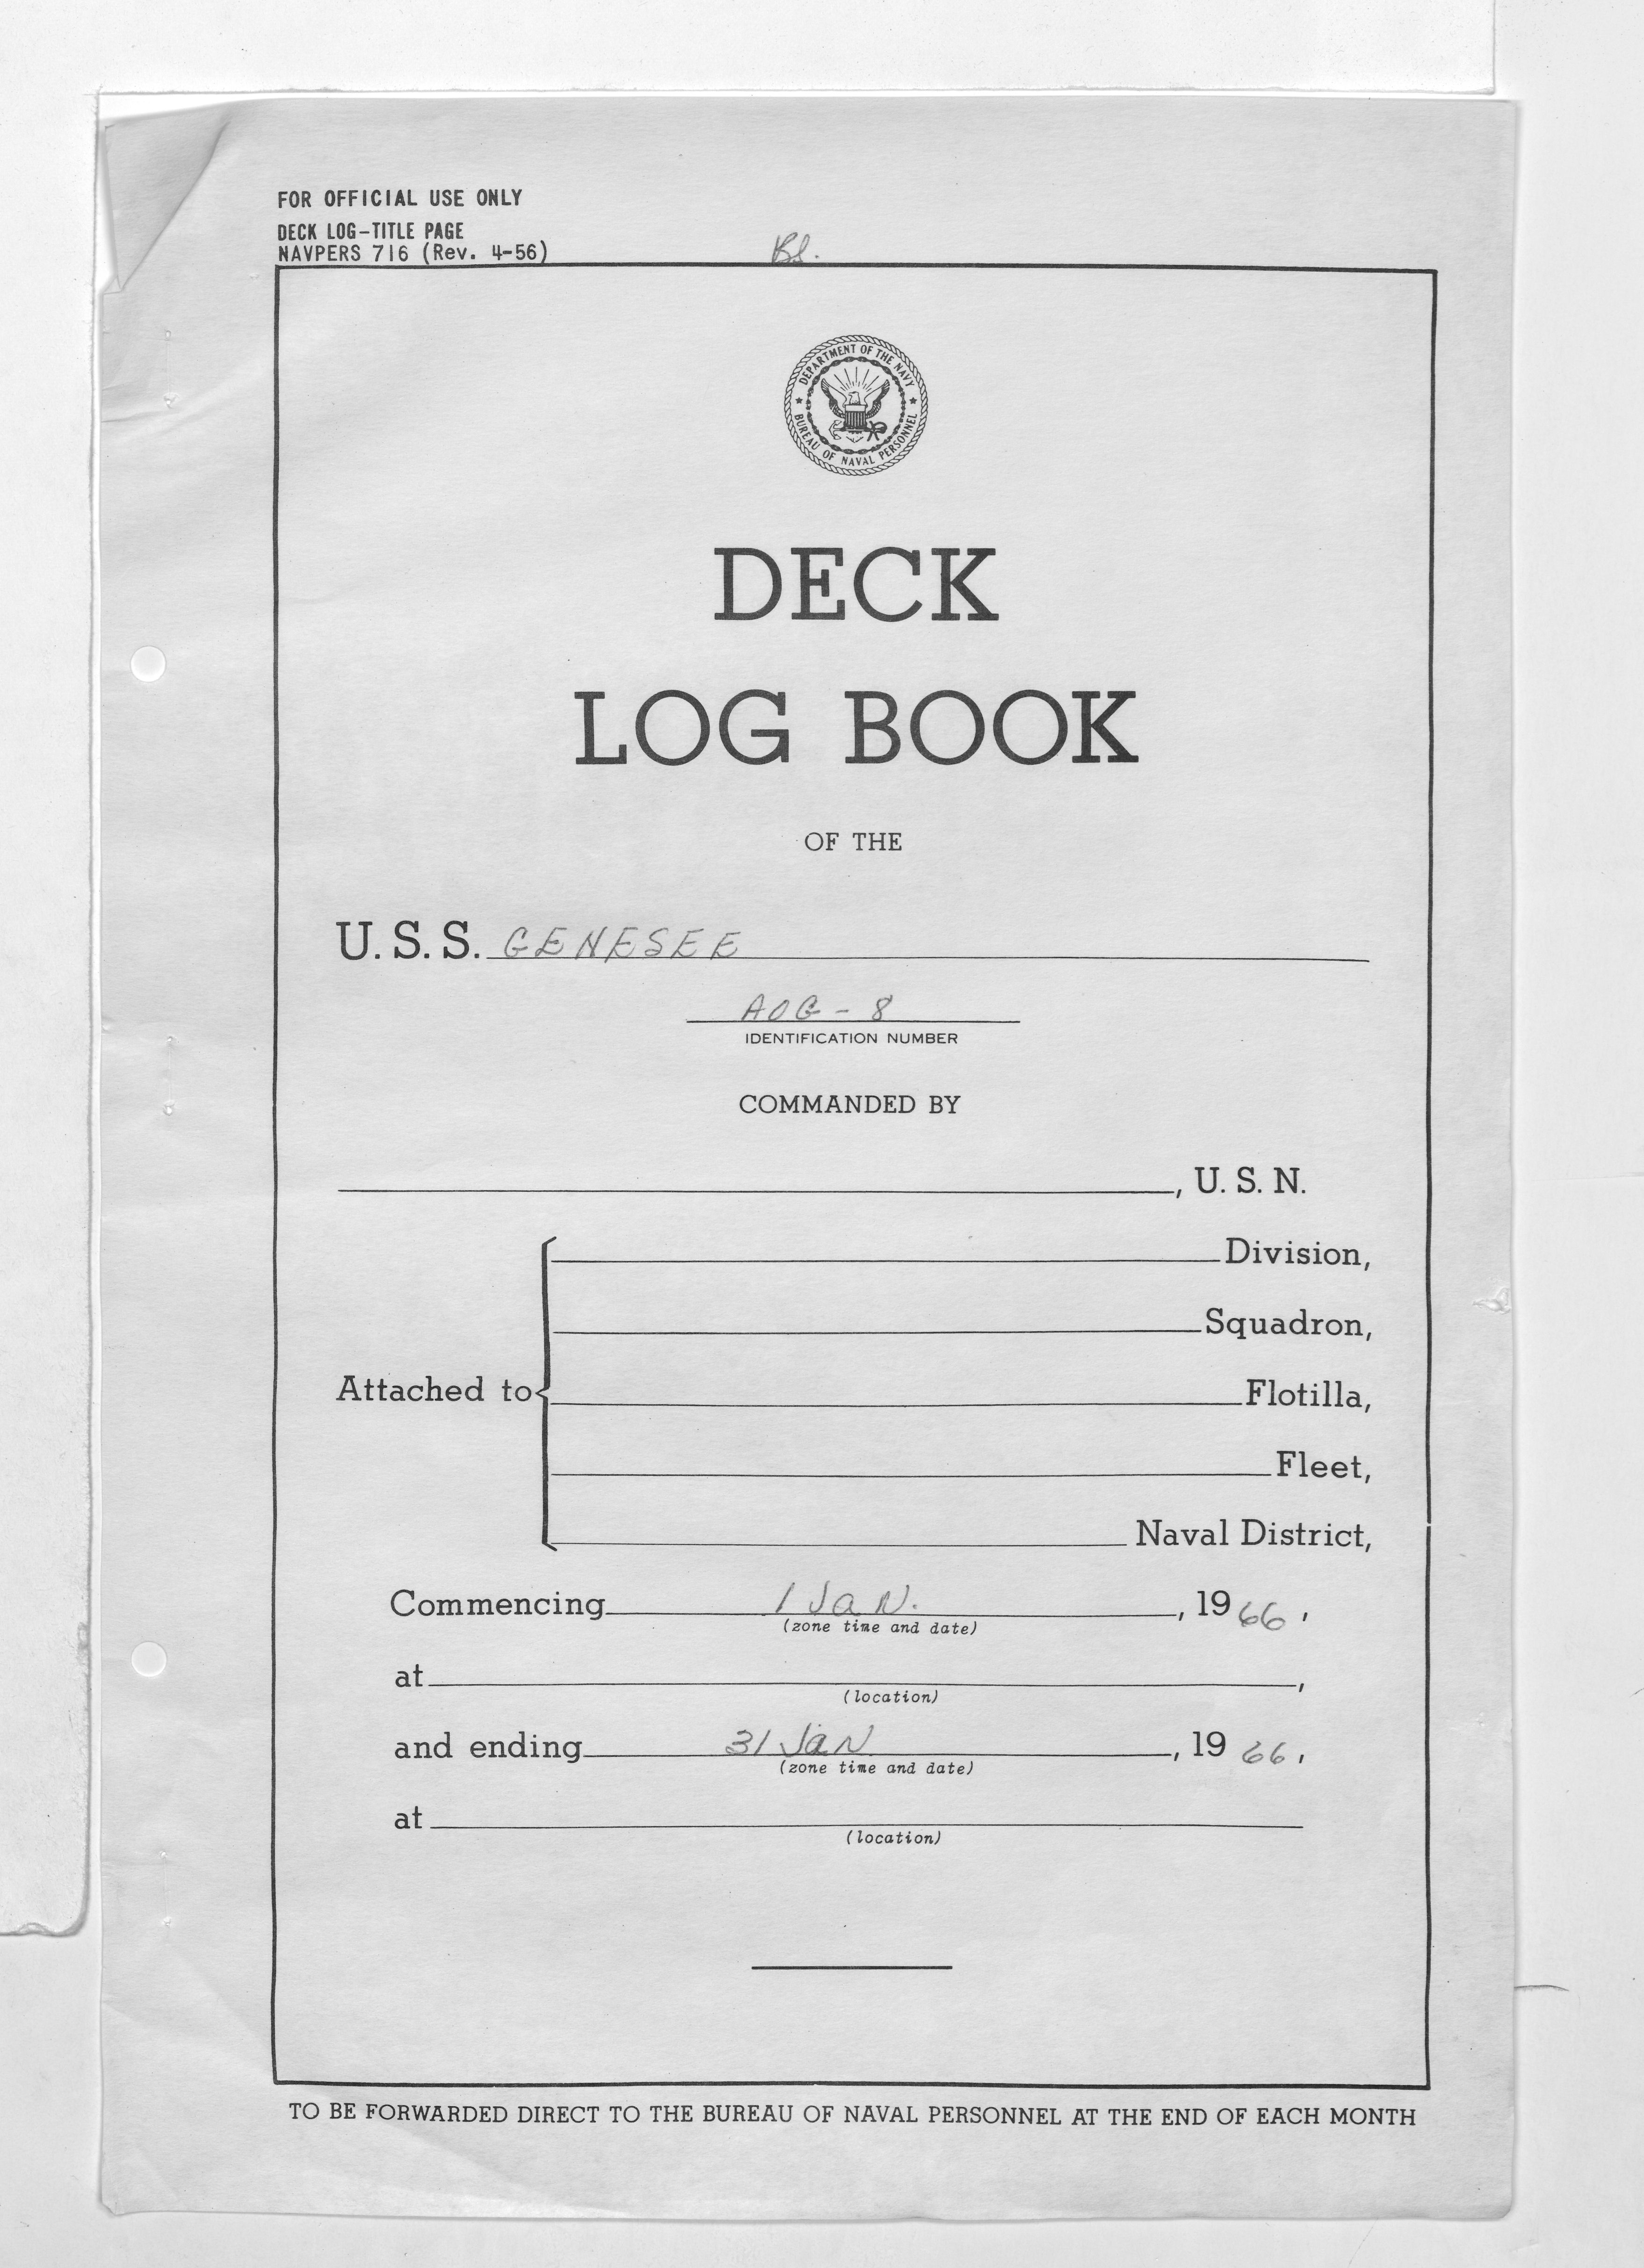 Log Books, United States Rules, Logbooks United States